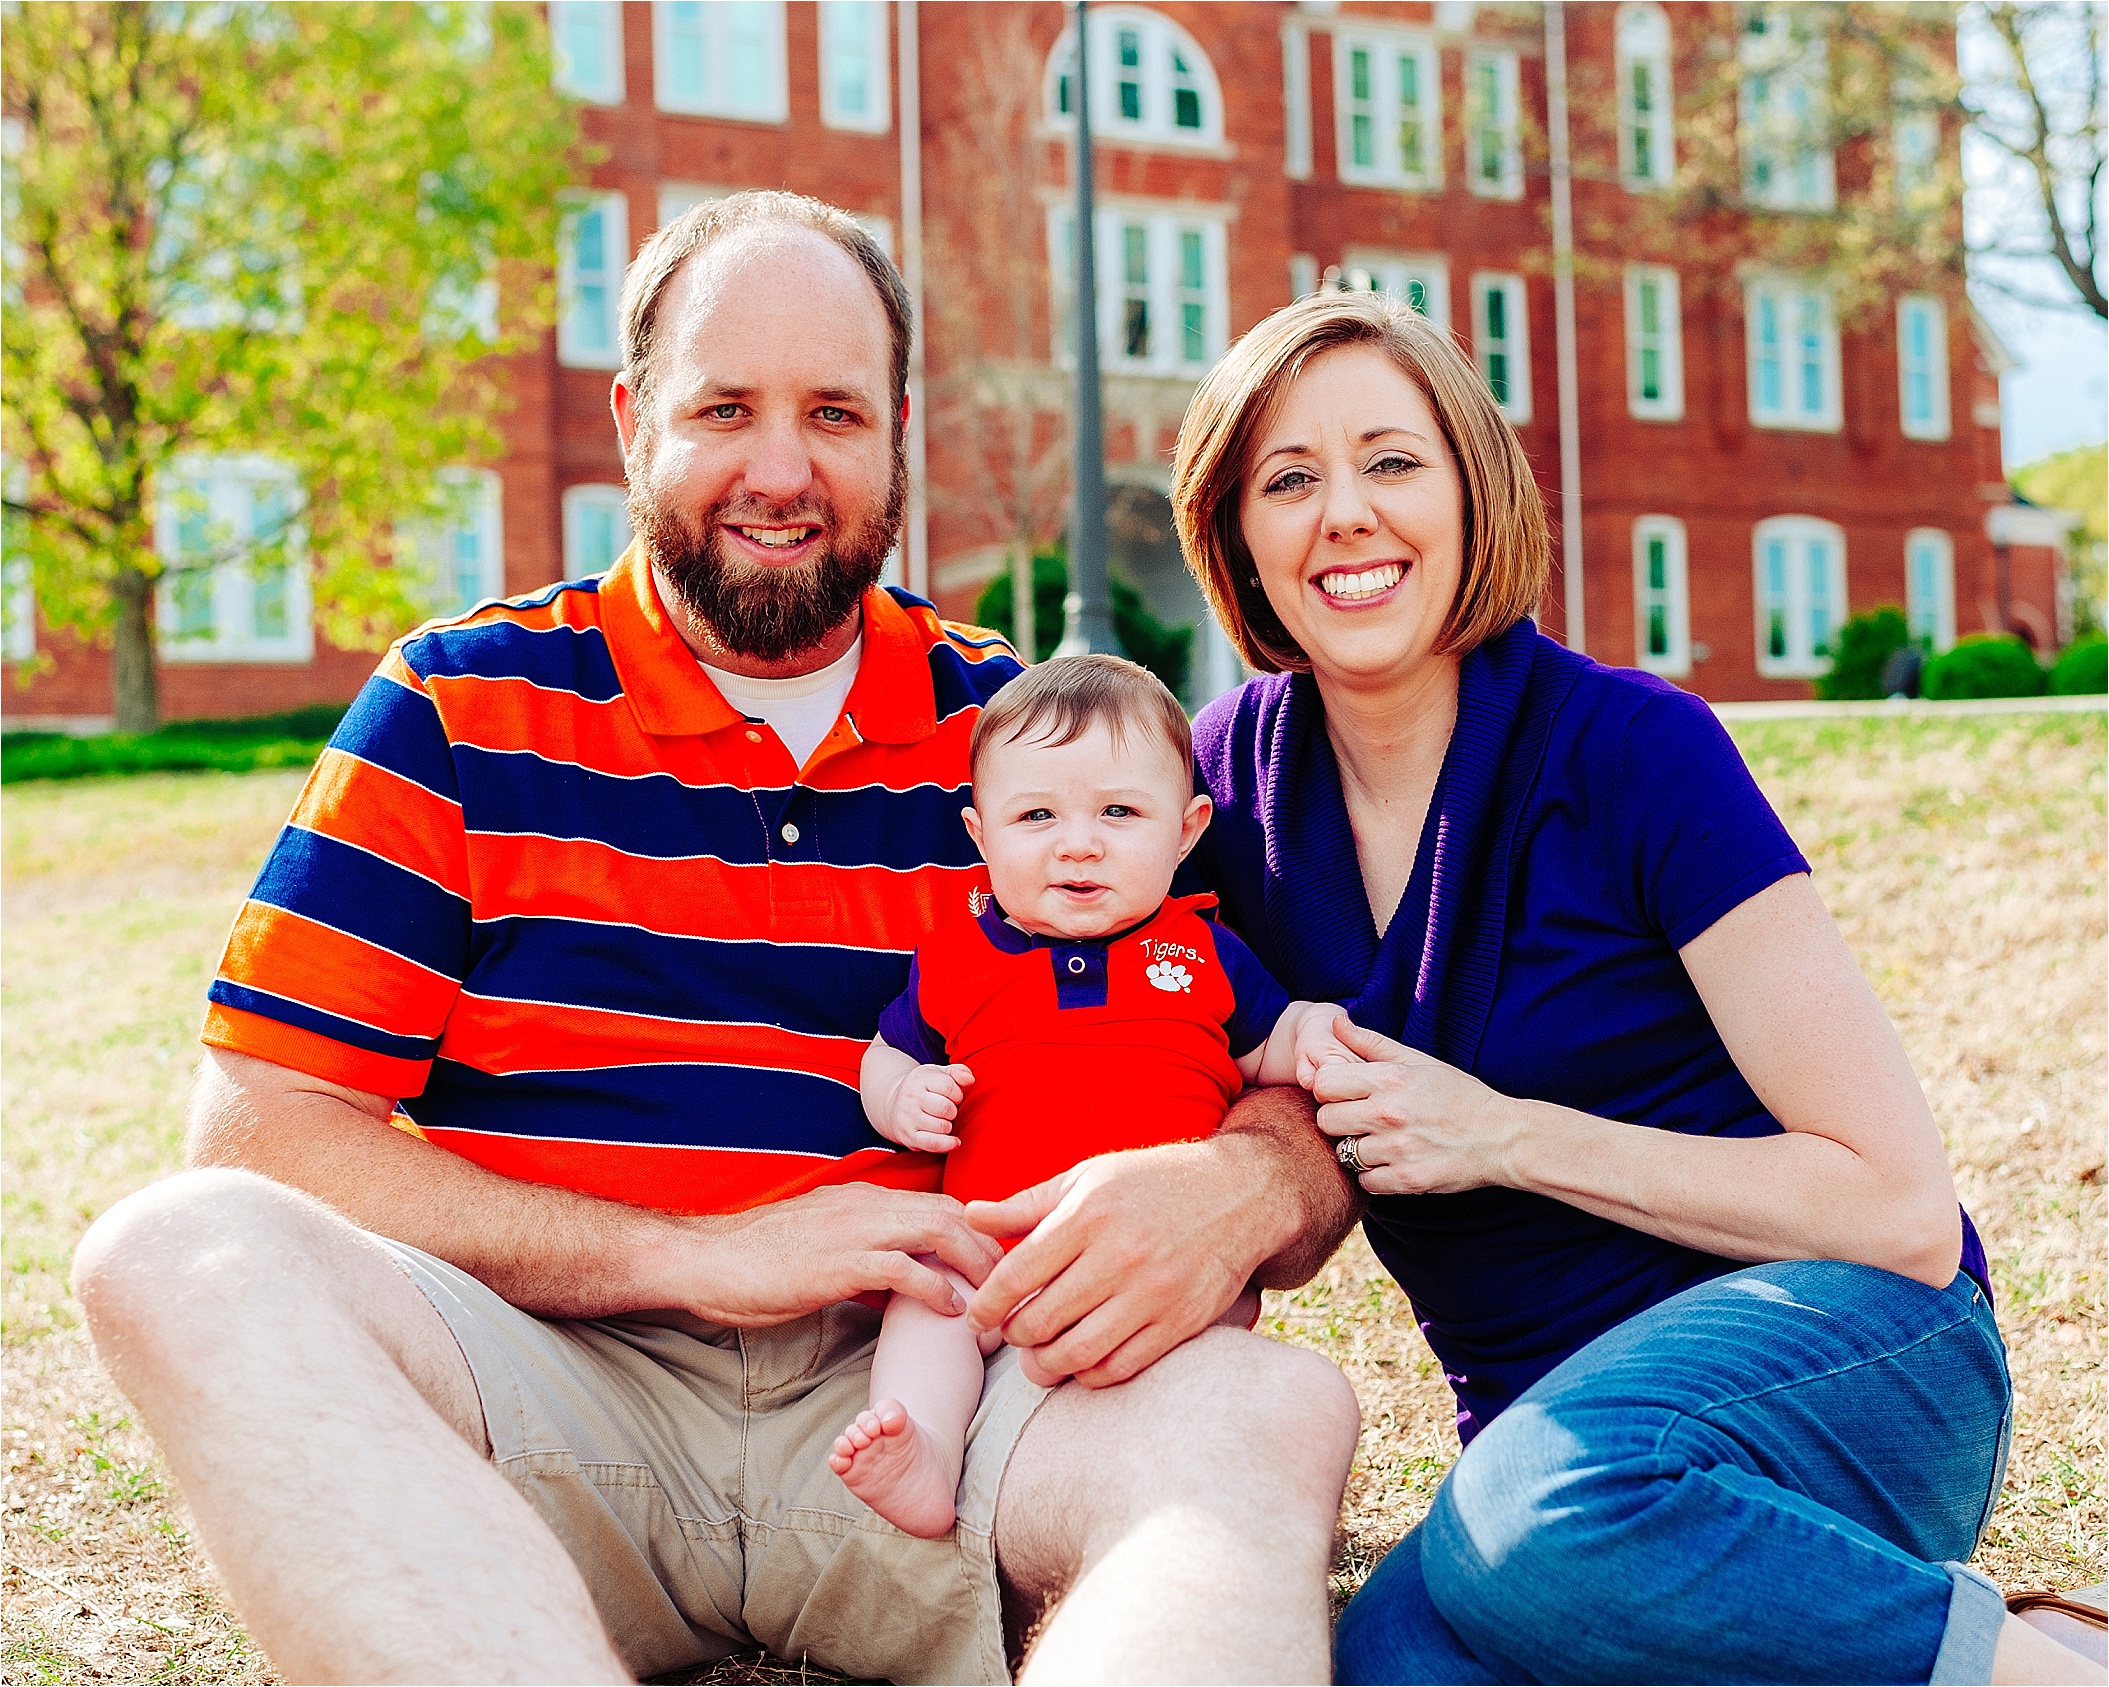 "Clemson University Family Photographs"